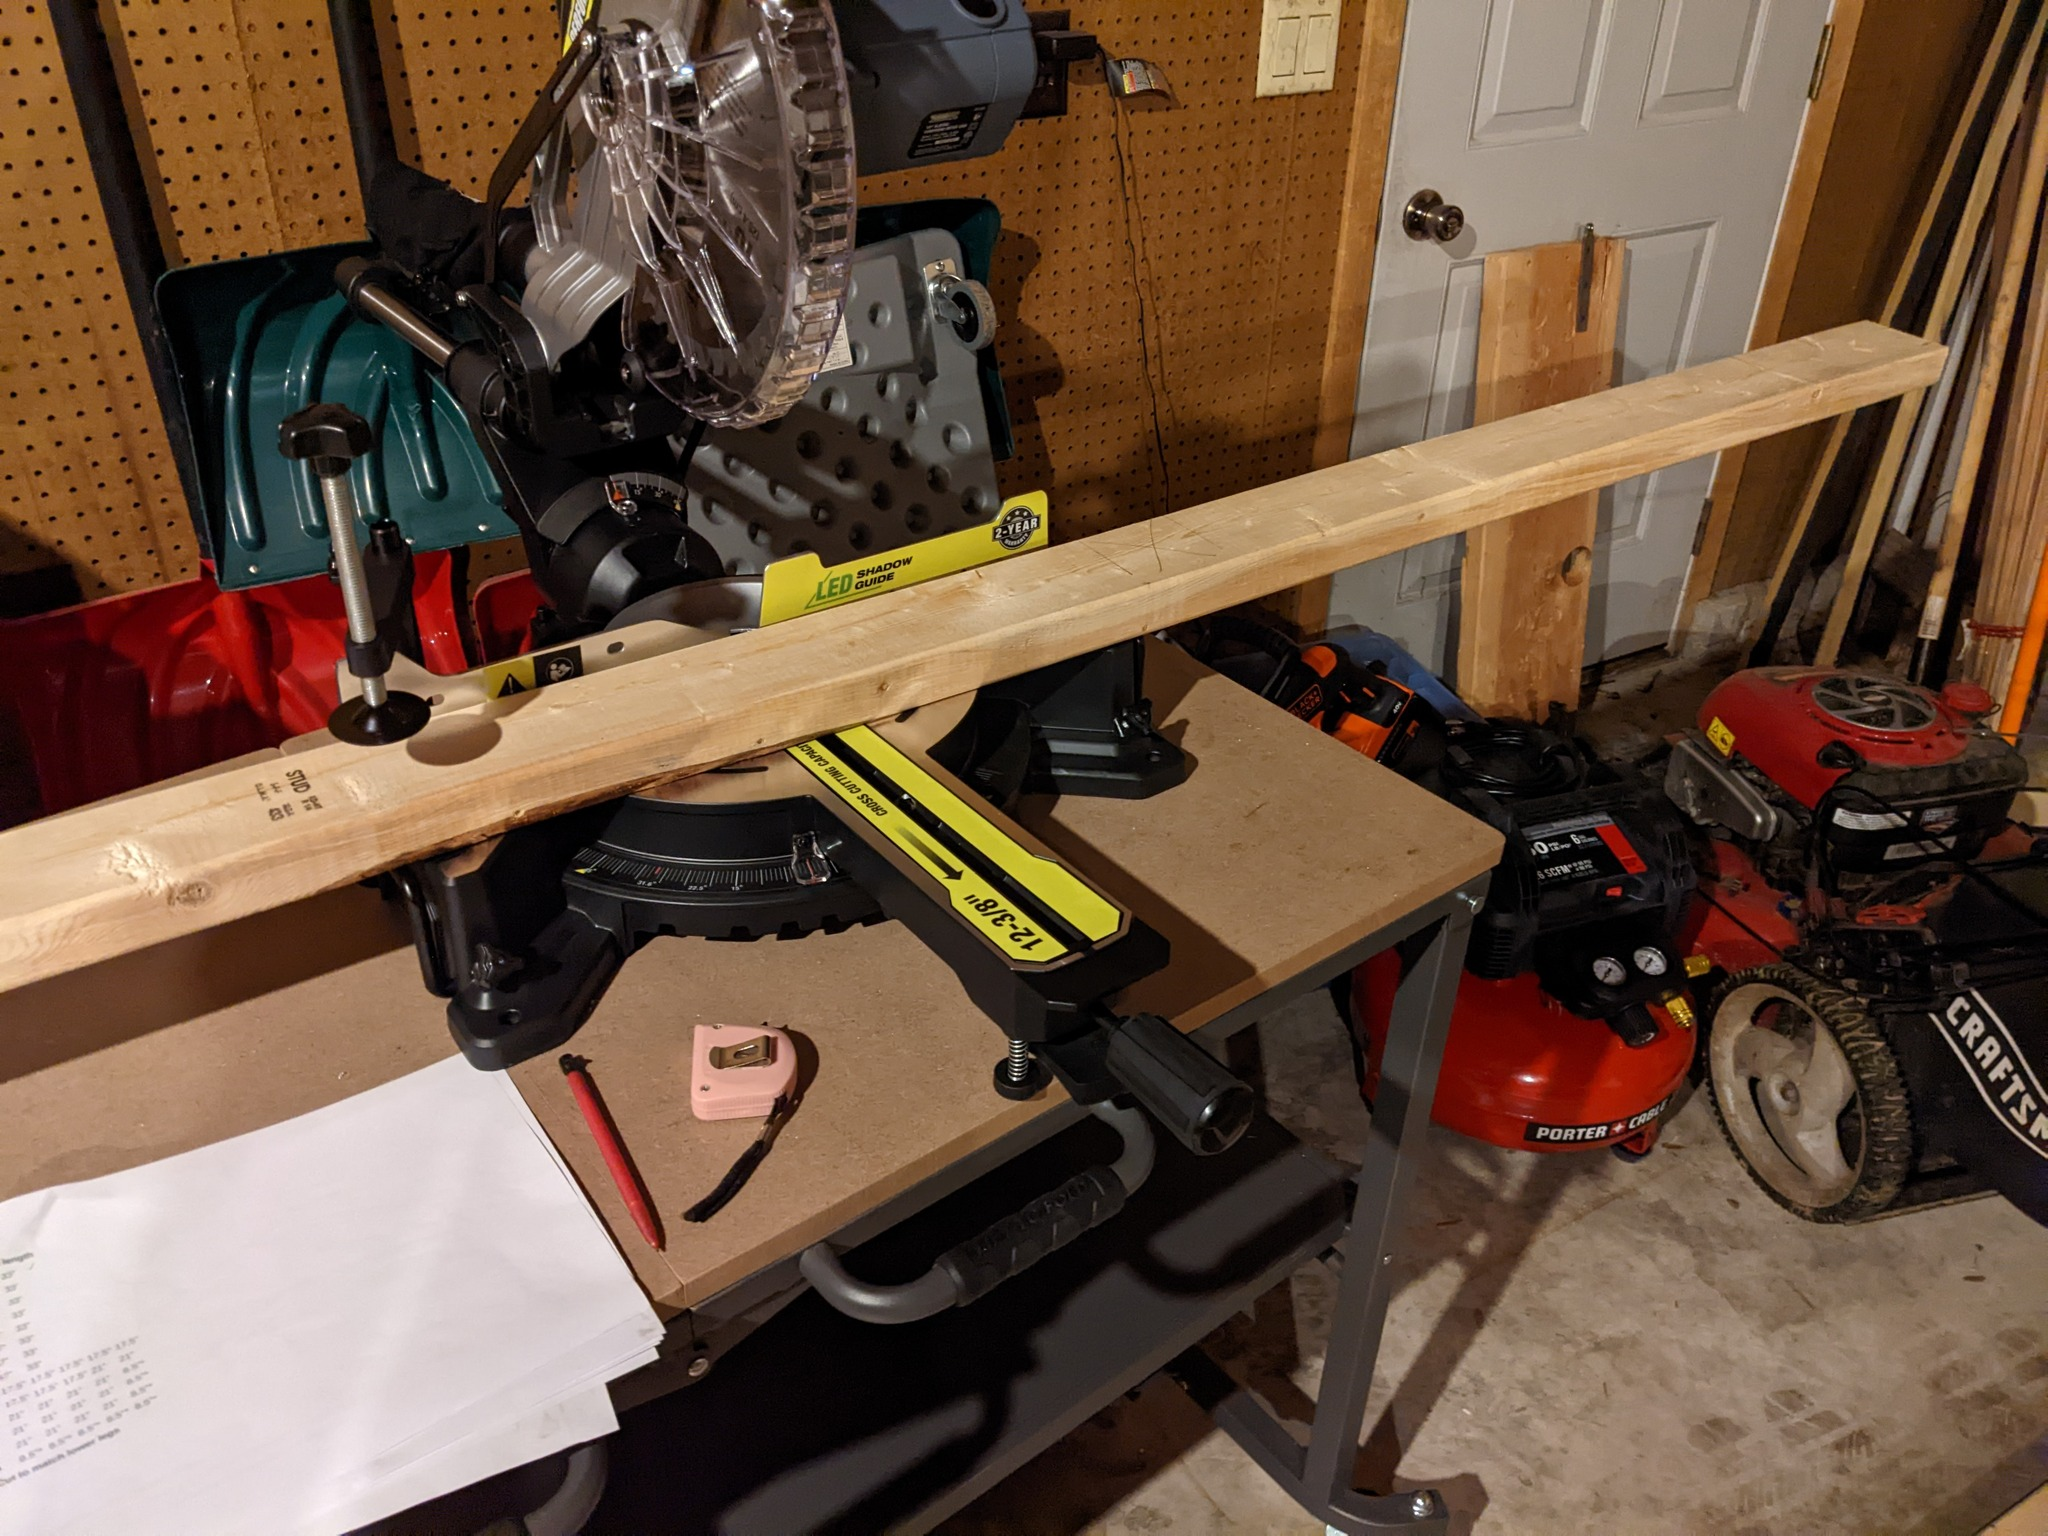 A 2x4 sitting on a miter saw